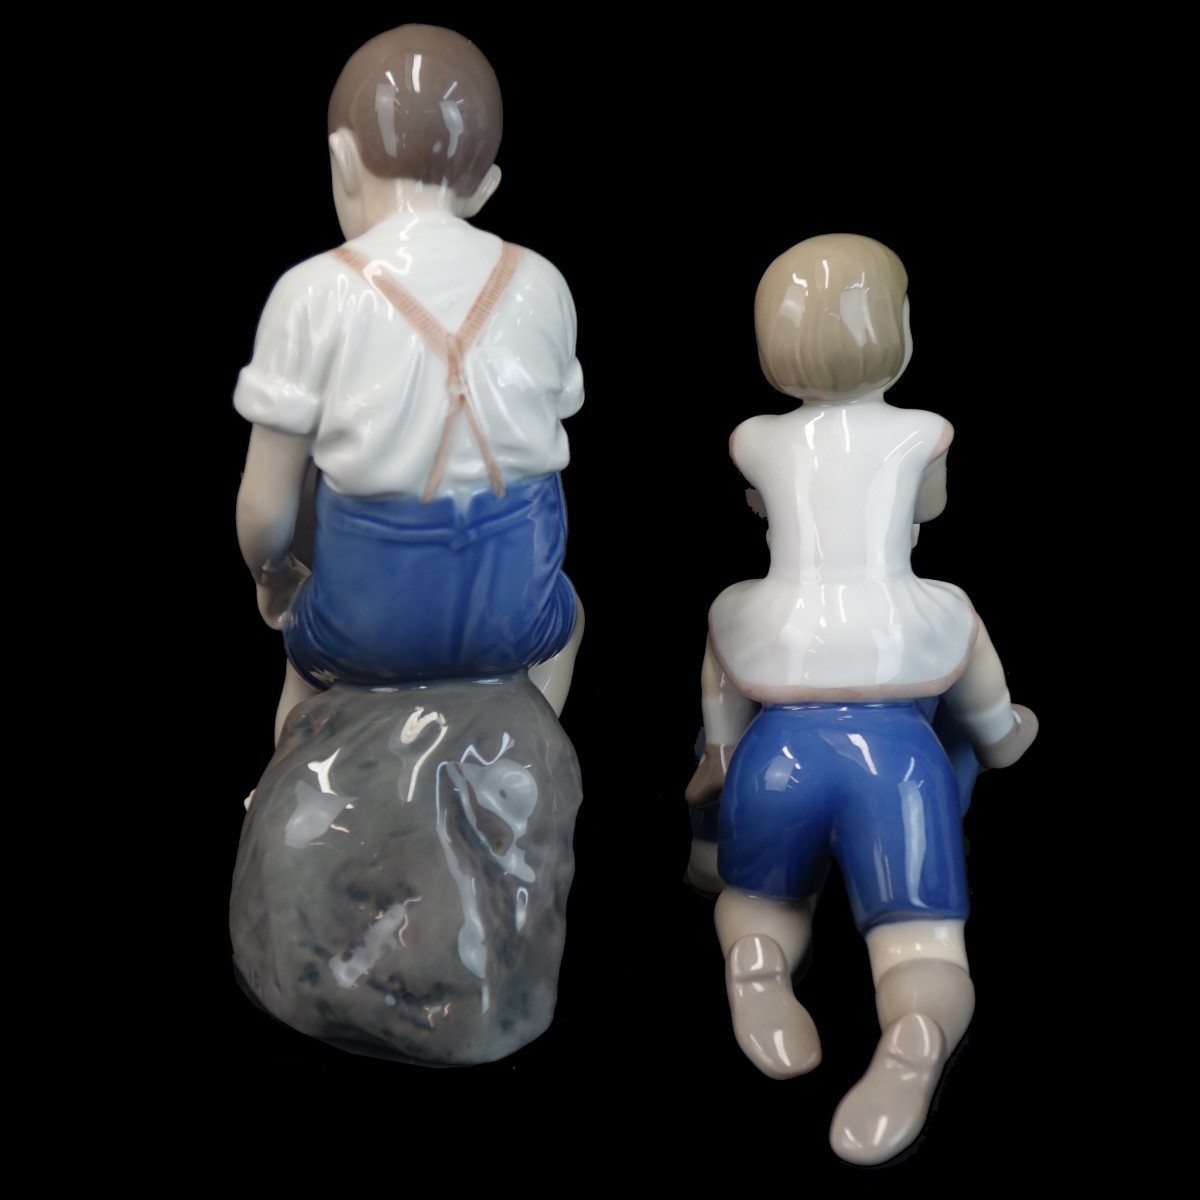 B&G Porcelain Figurines